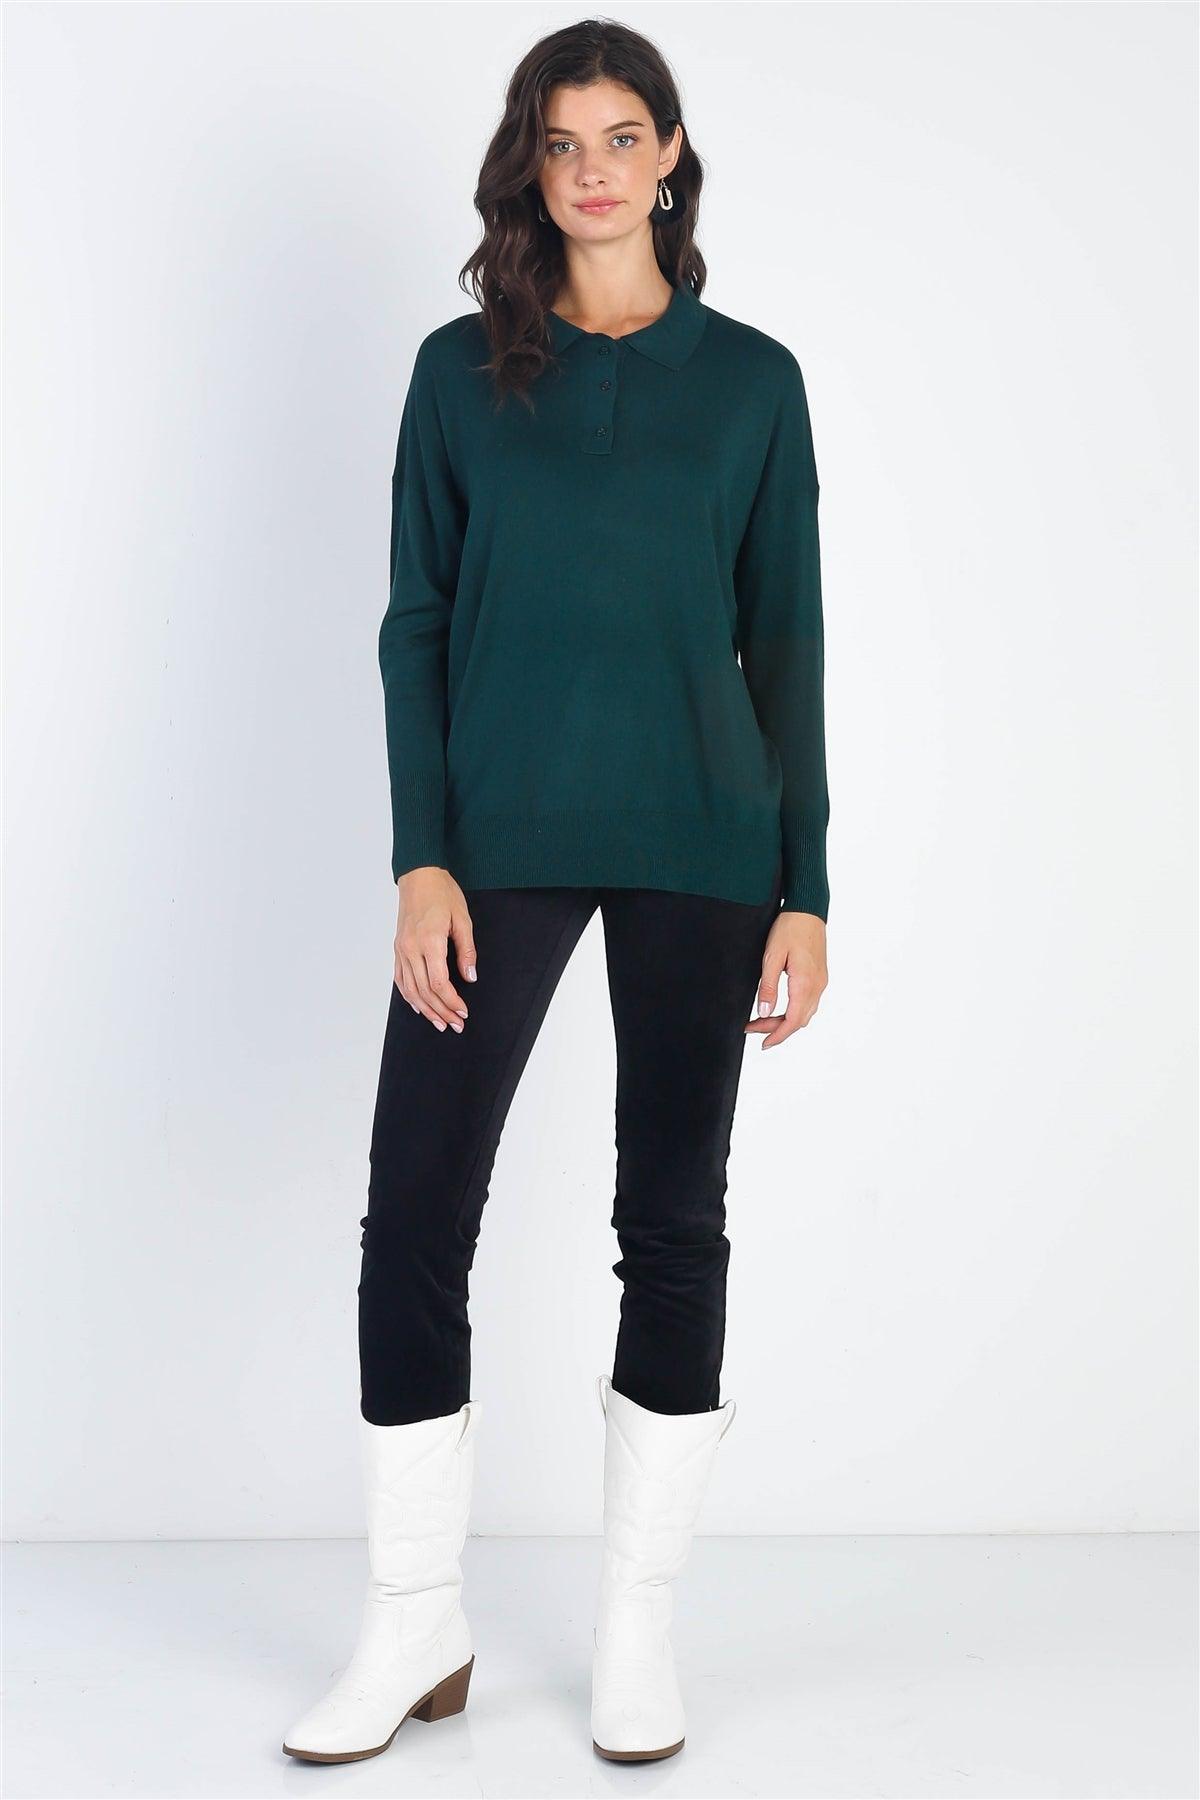 Heather Green Button Up Collar Neck Long Sleeve Sweater /2-2-2